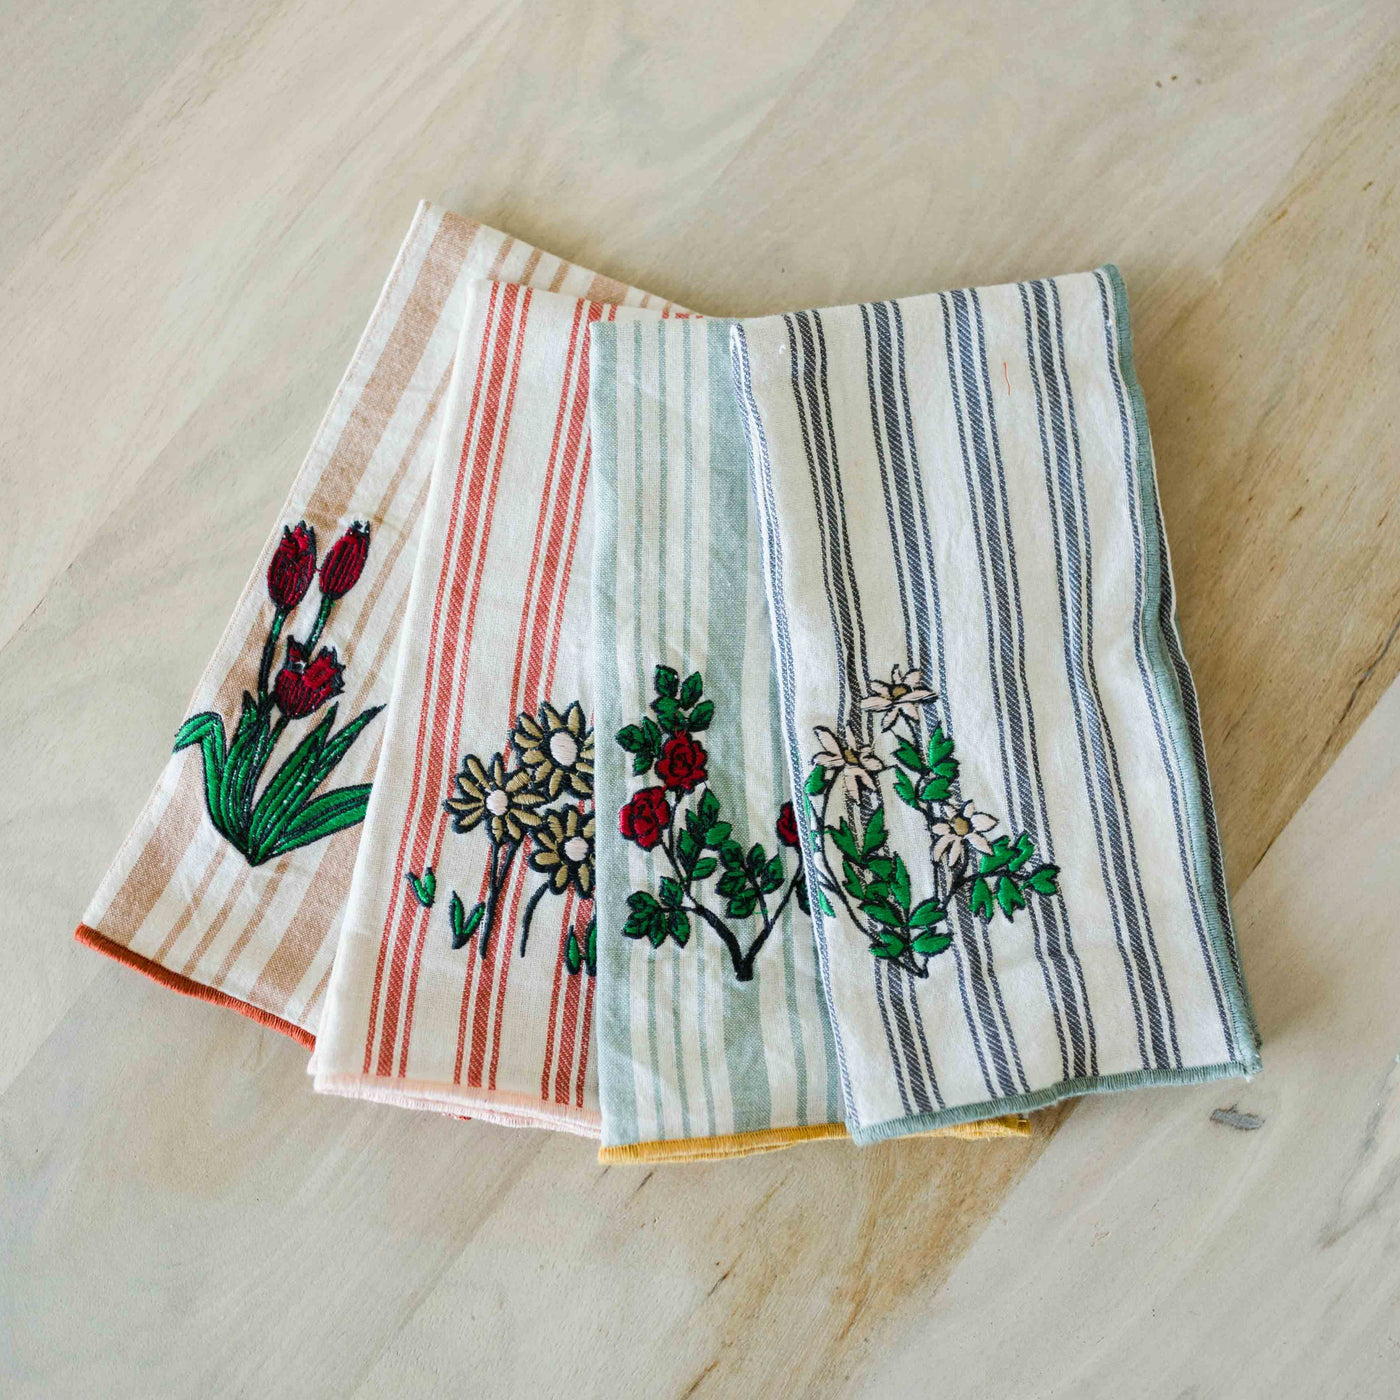 Embroidered Cloth Napkin Set